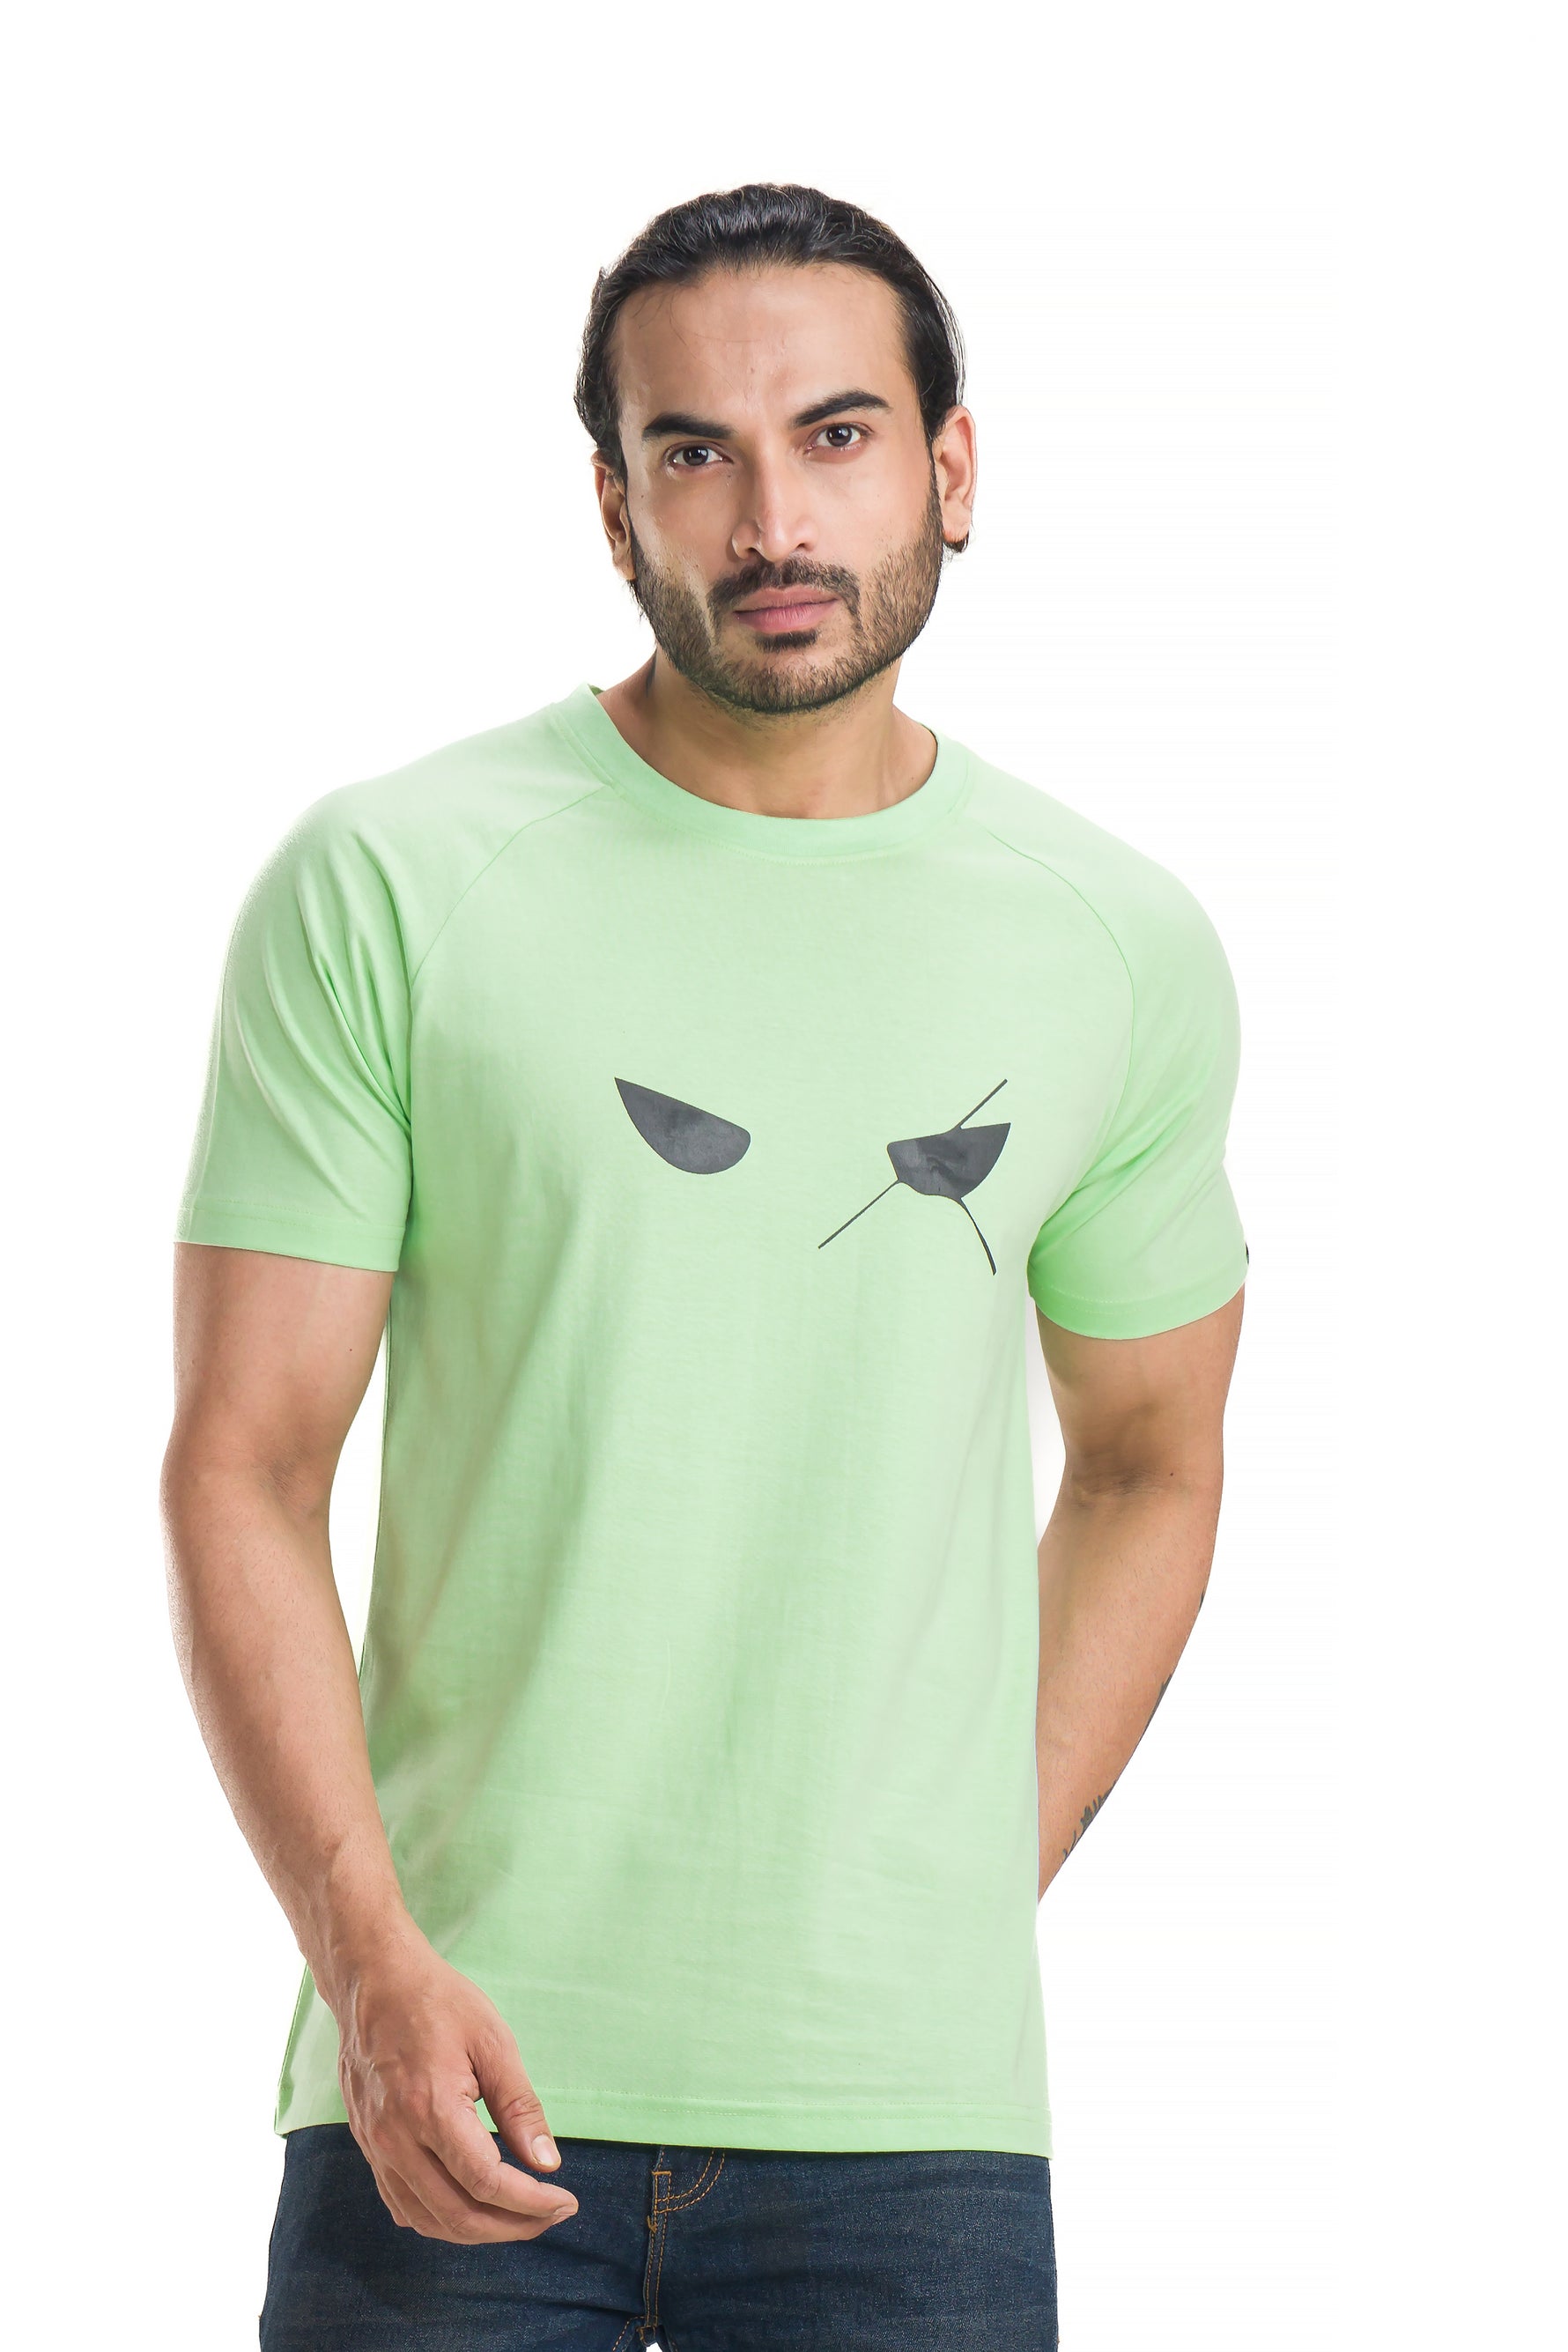 Mint Green Men\'s Standard Fashion T-Shirt Raglan Souped – Up Printed